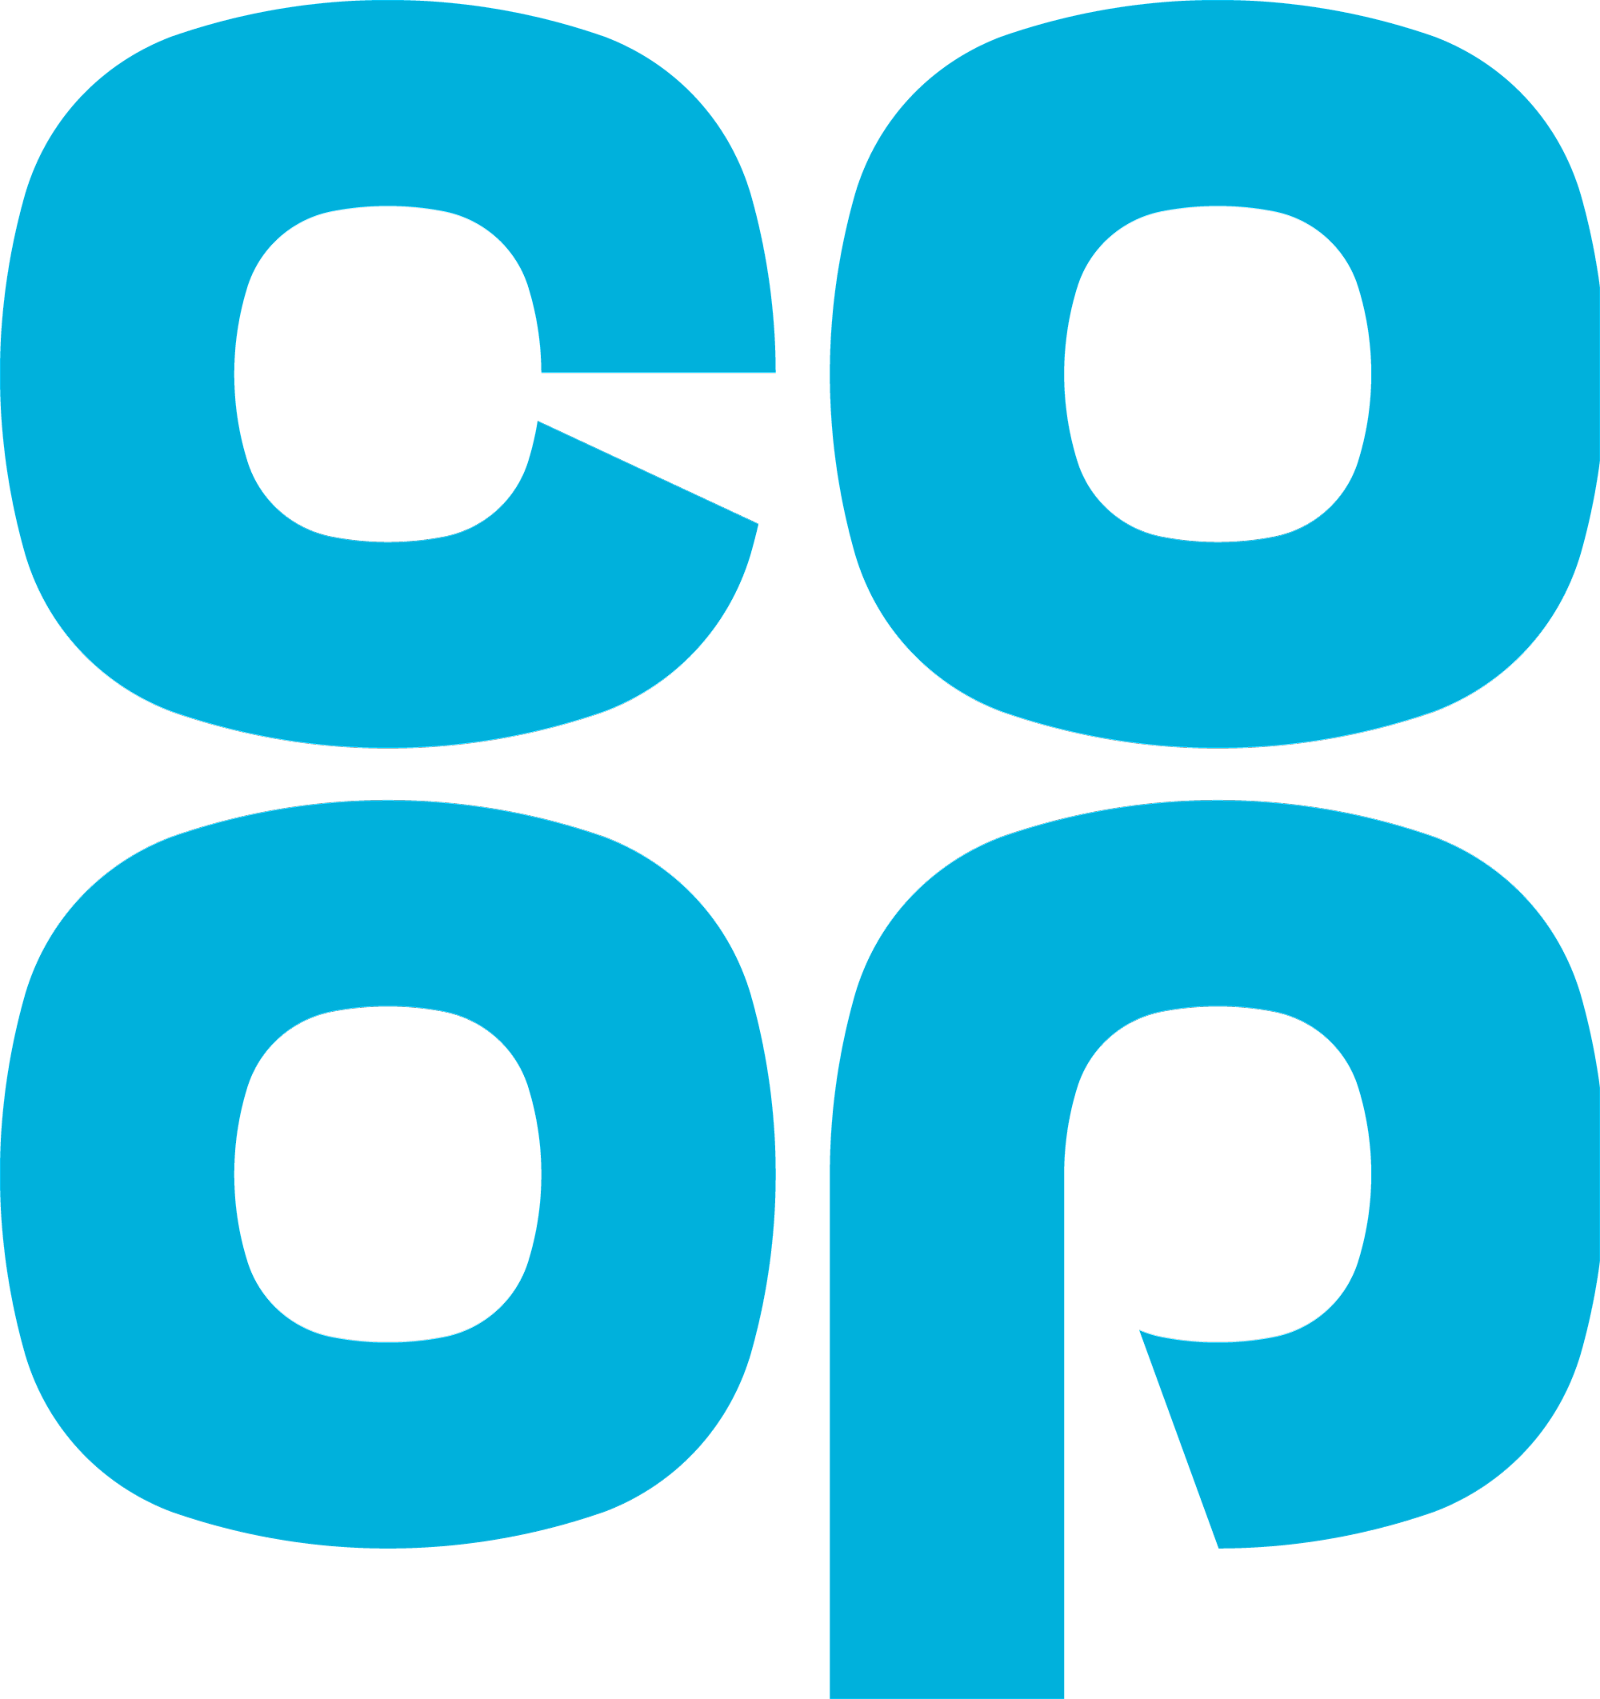 Co-op Brand Image